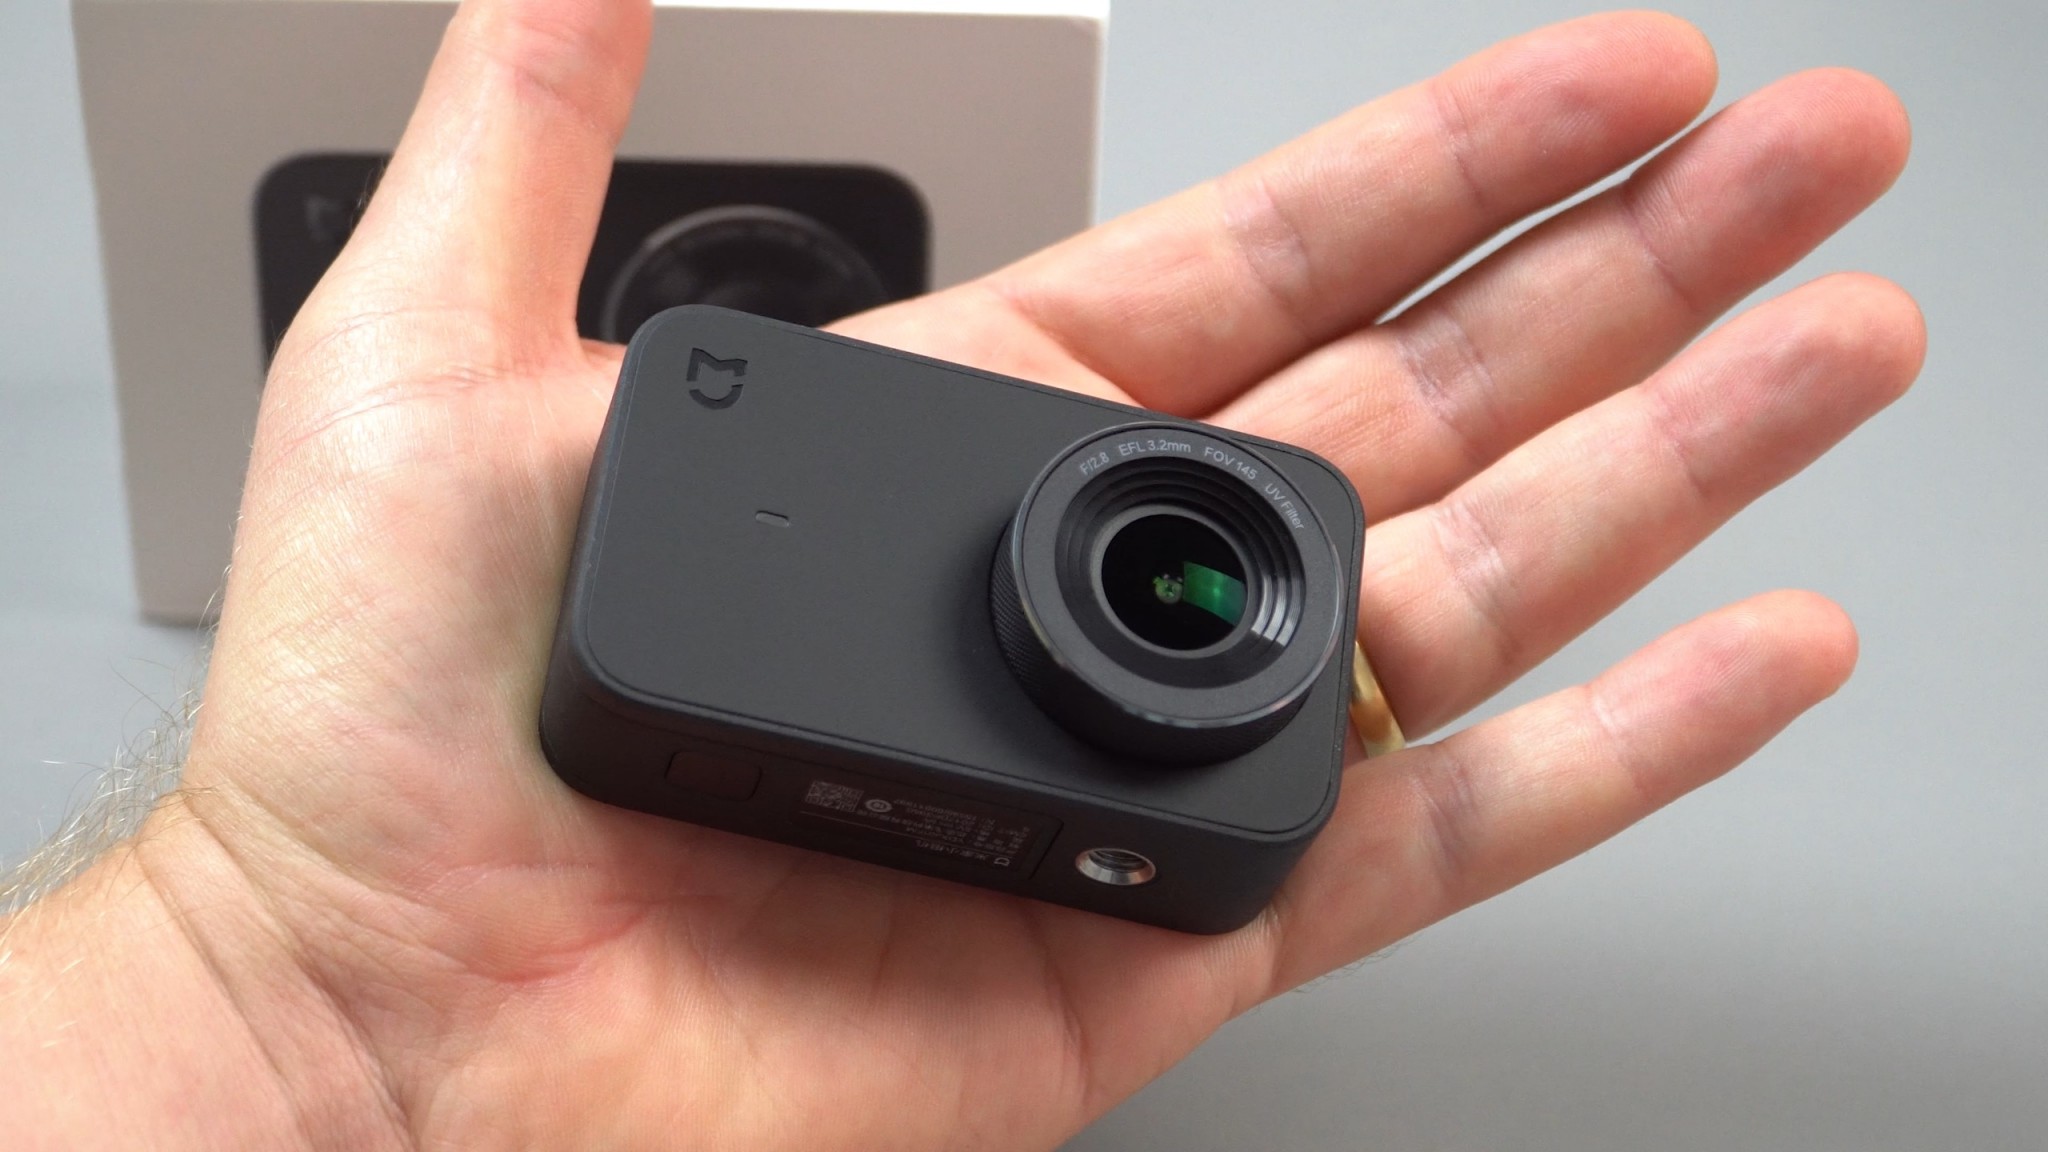 Xiaomi Mijia 4k Action Camera Review - A $89 GoPro Hero6 Alternative